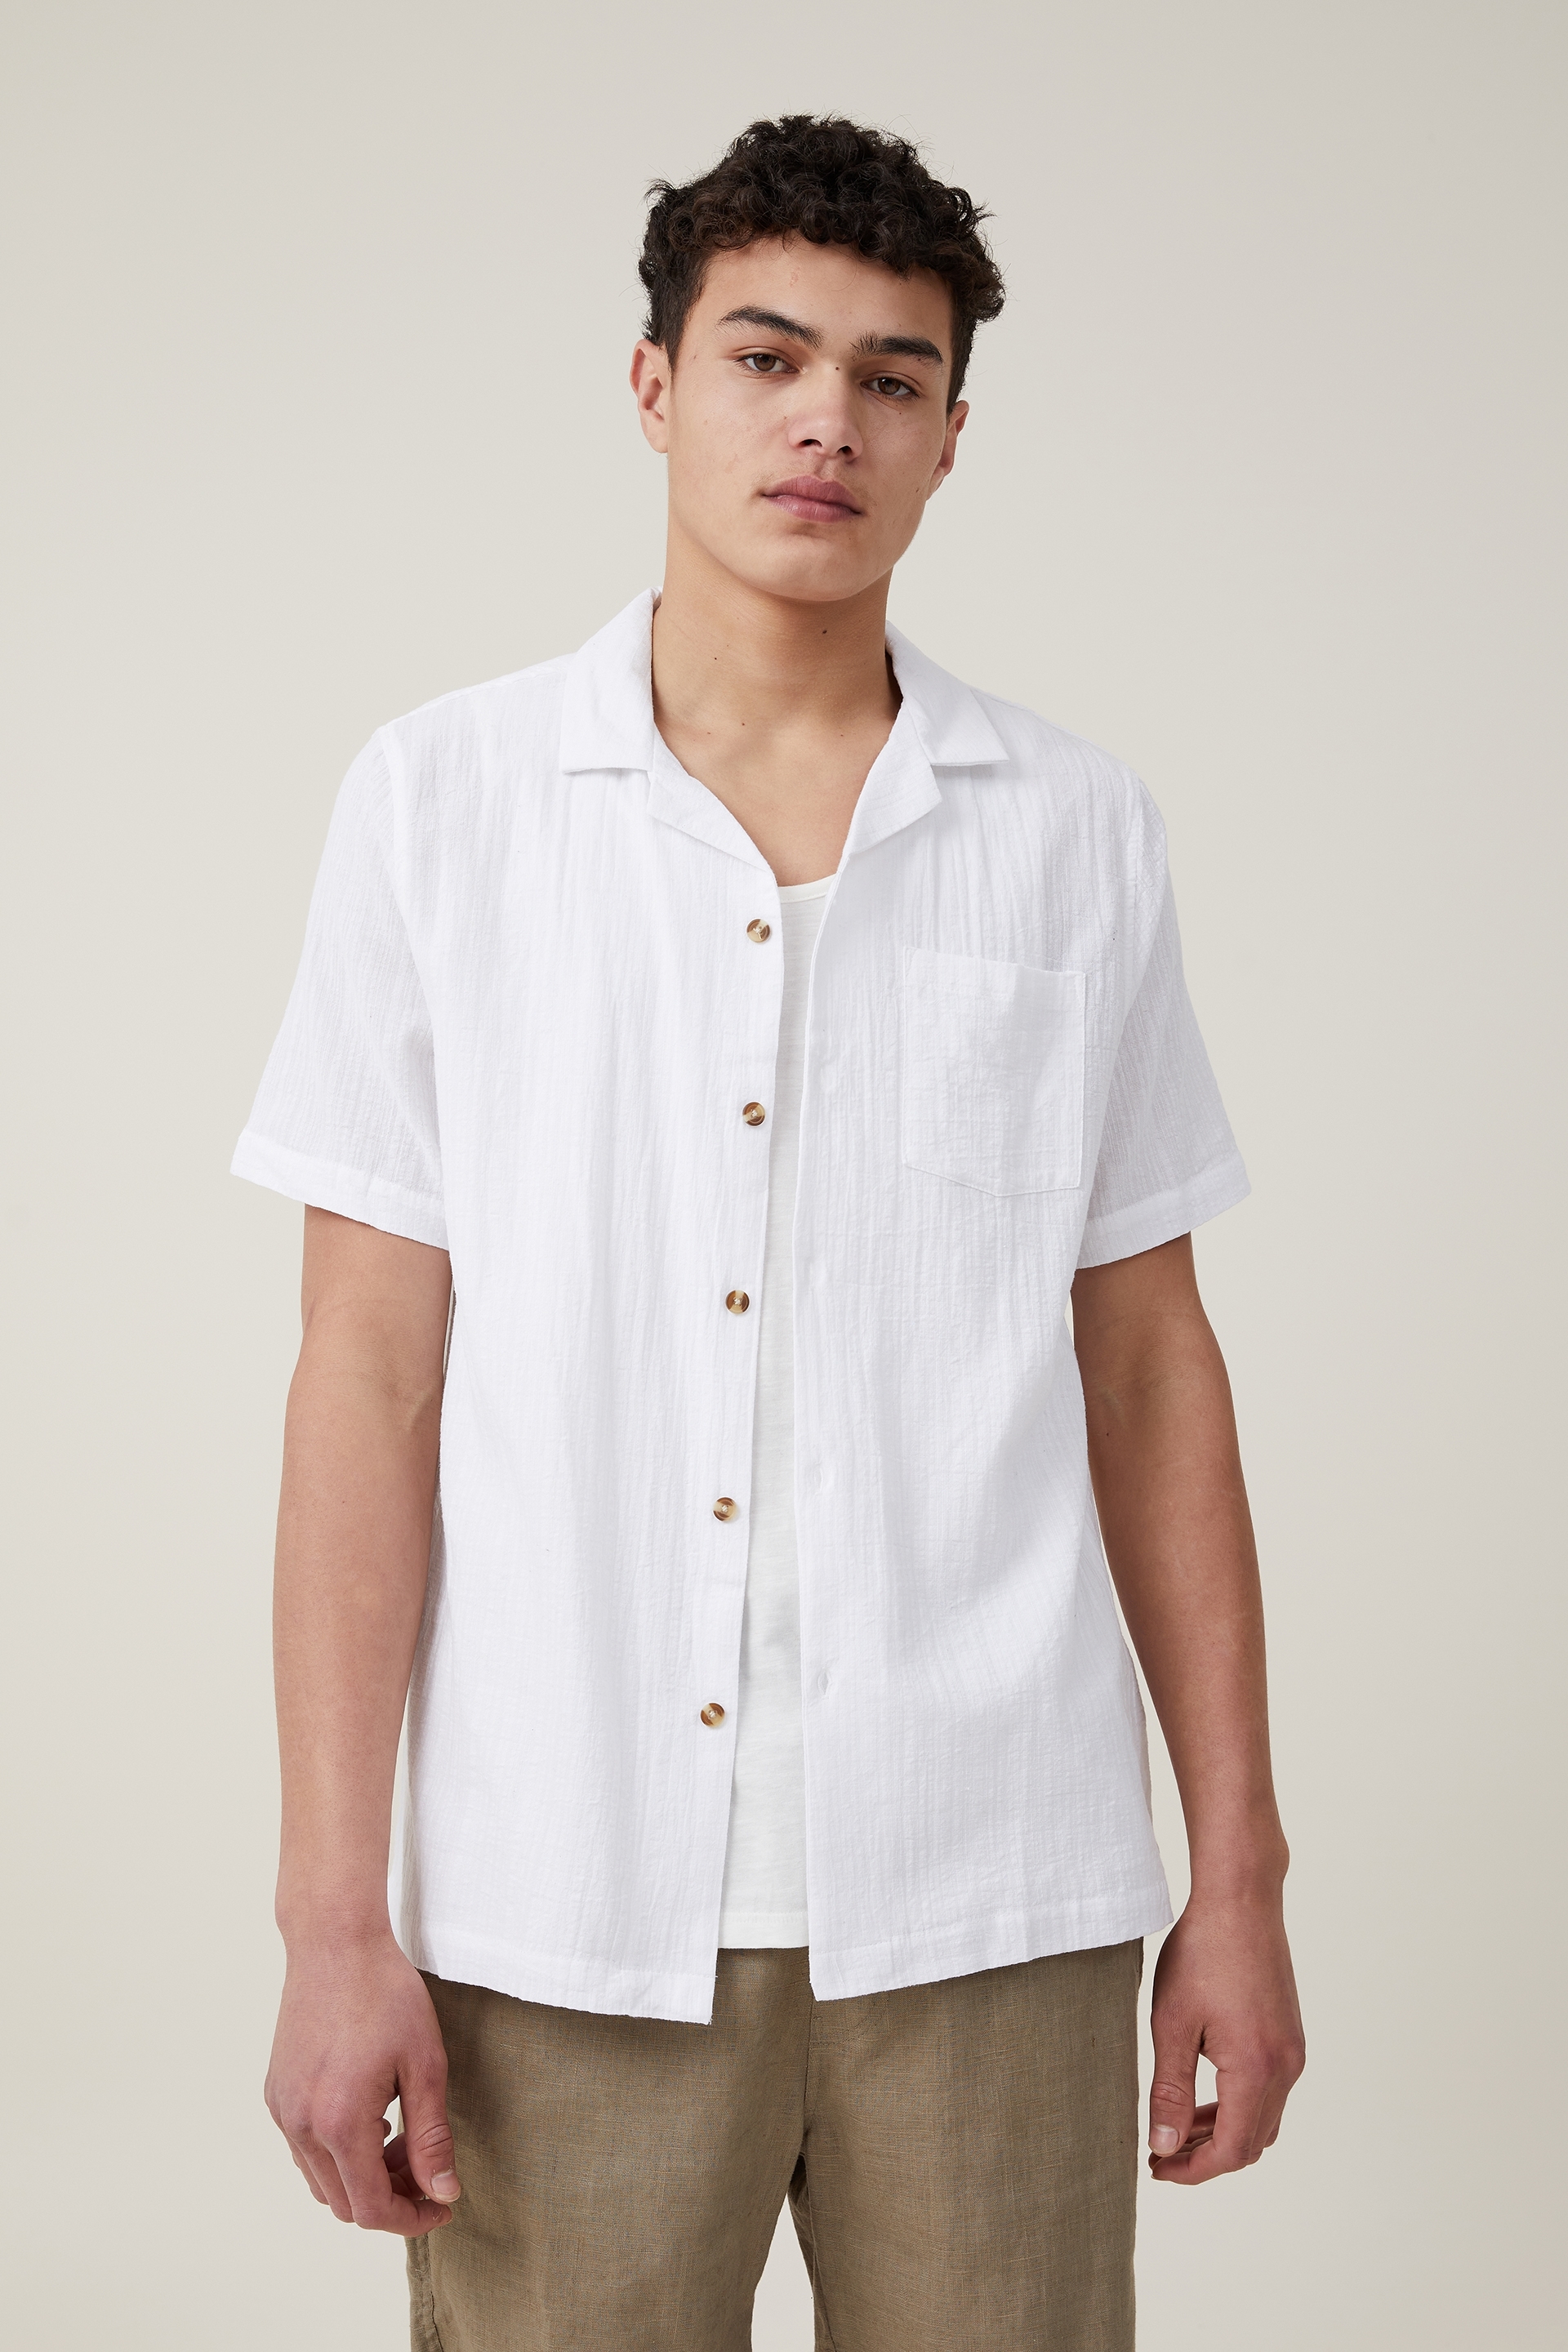 Cotton On Men - Riviera Short Sleeve Shirt - White